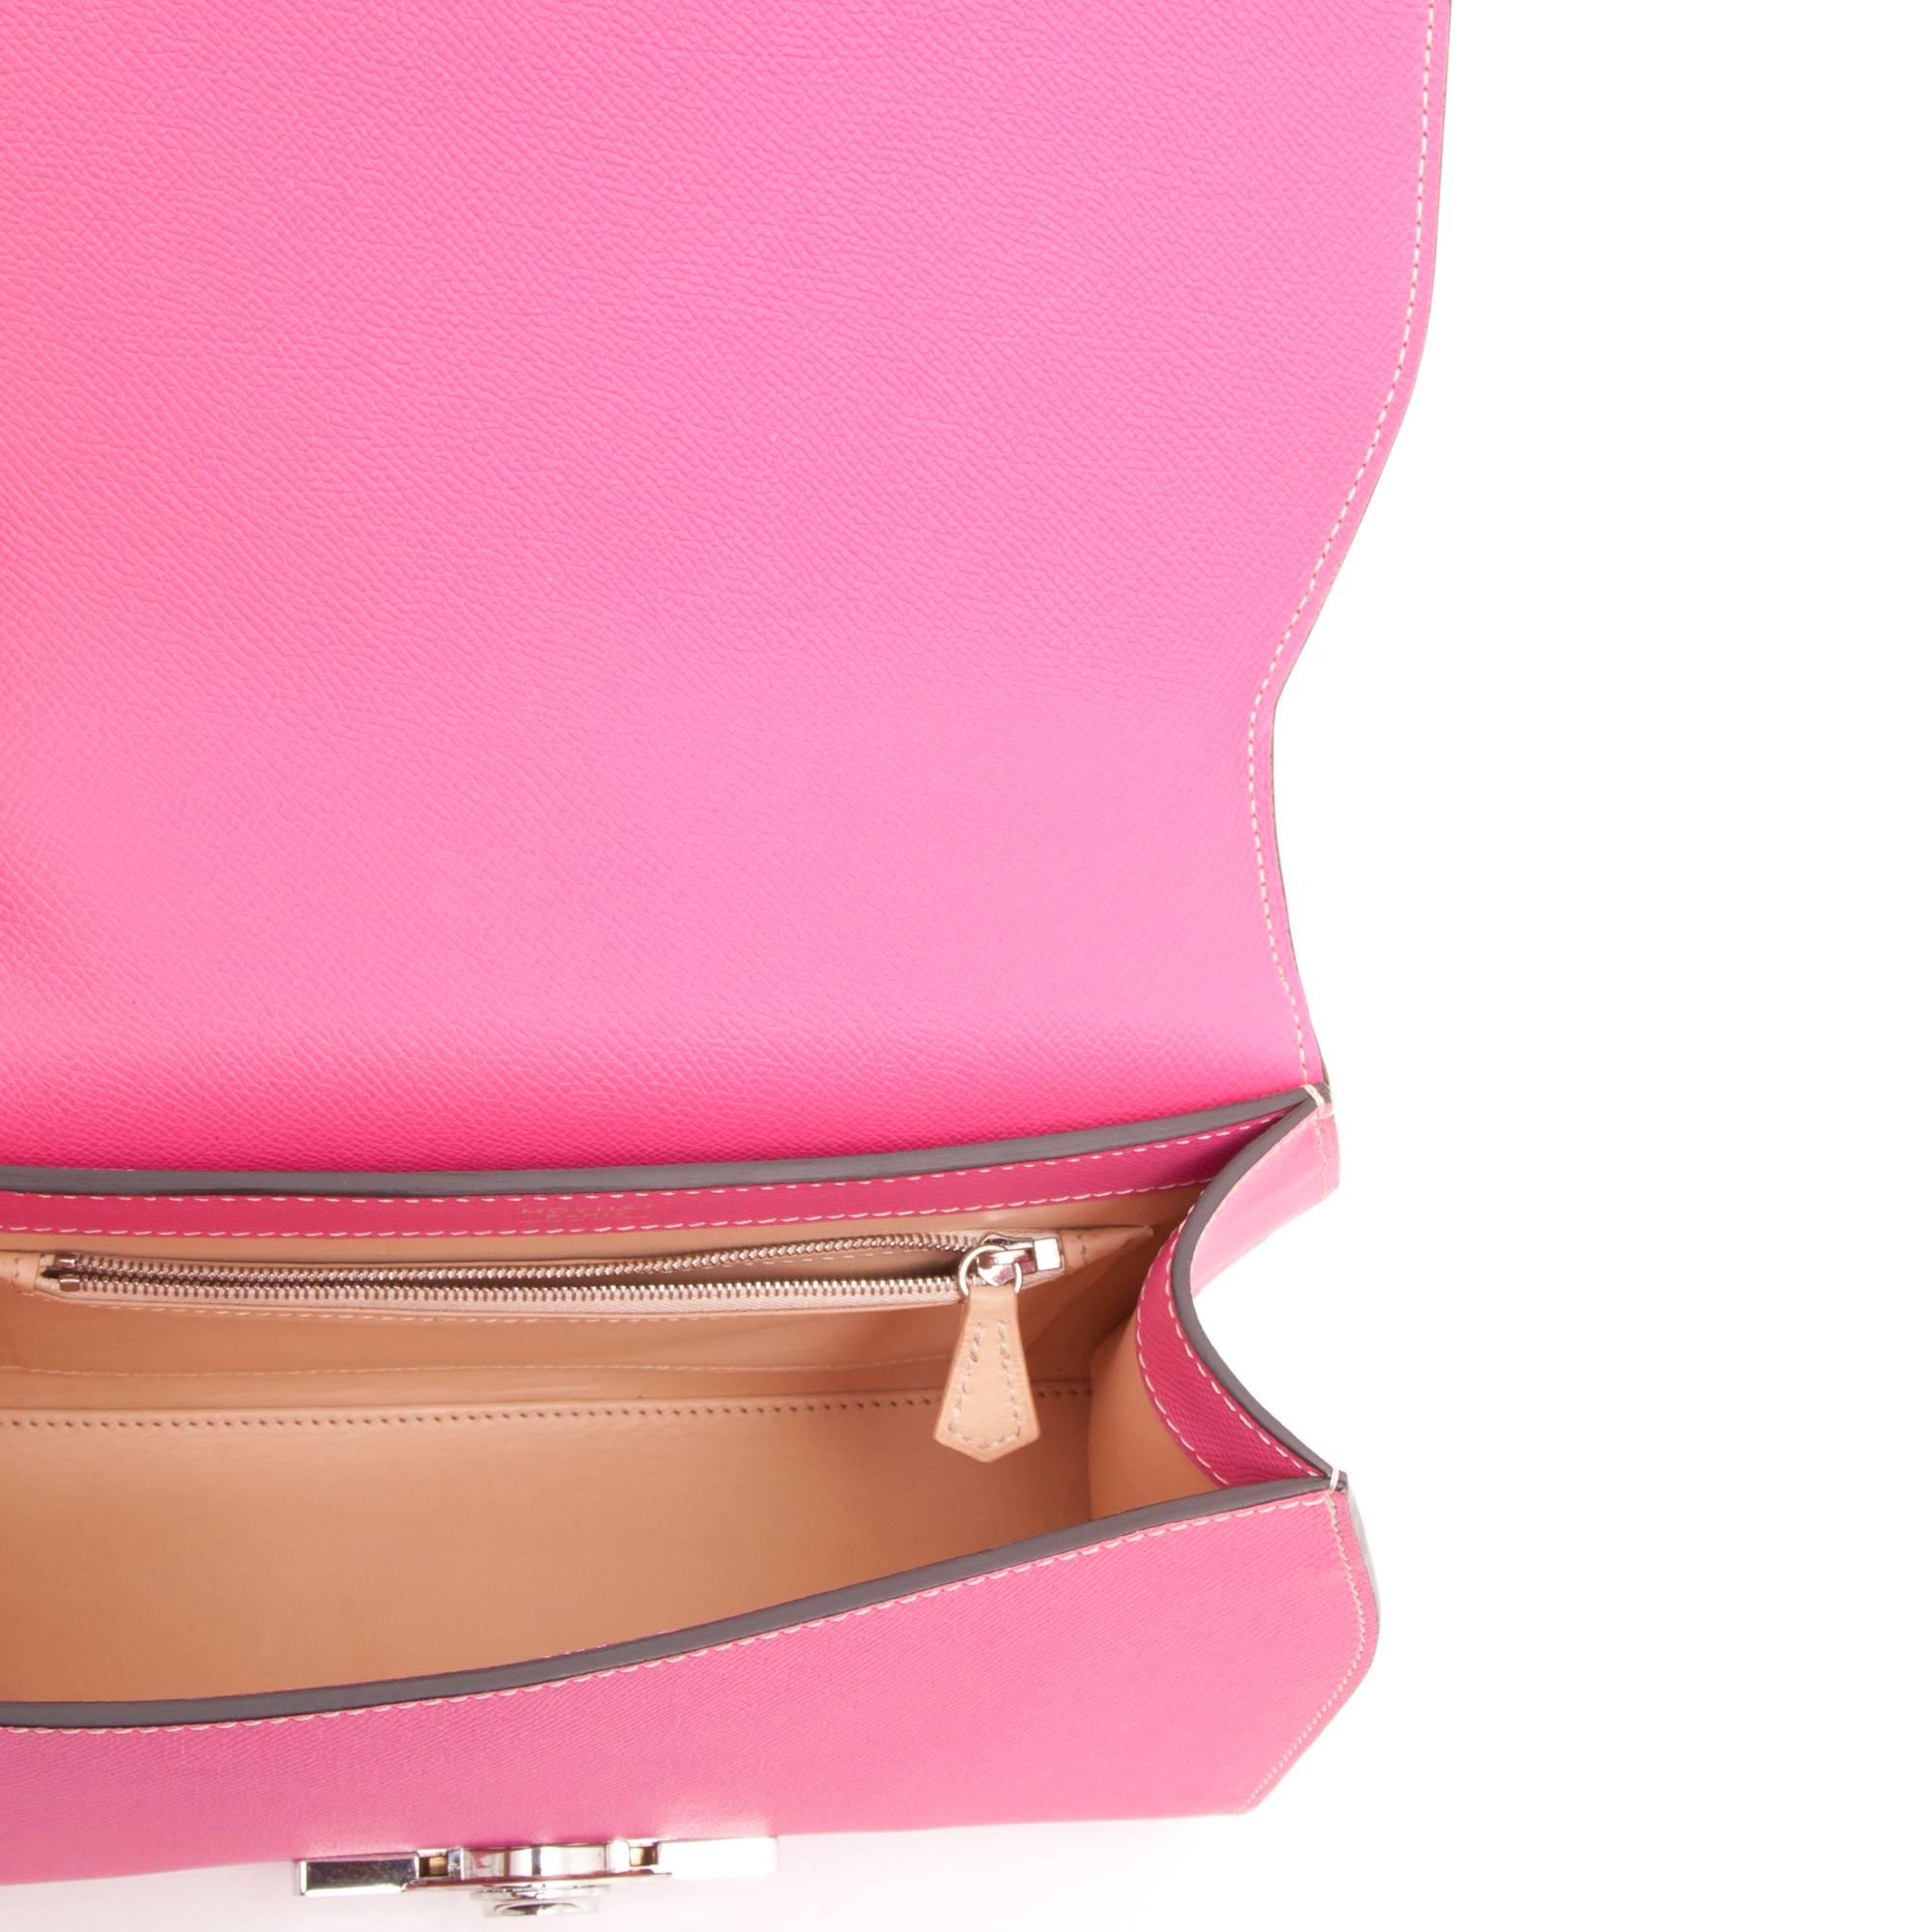 Women's MOYNAT Bag 'Rejane' Model in Candy Pink Leather